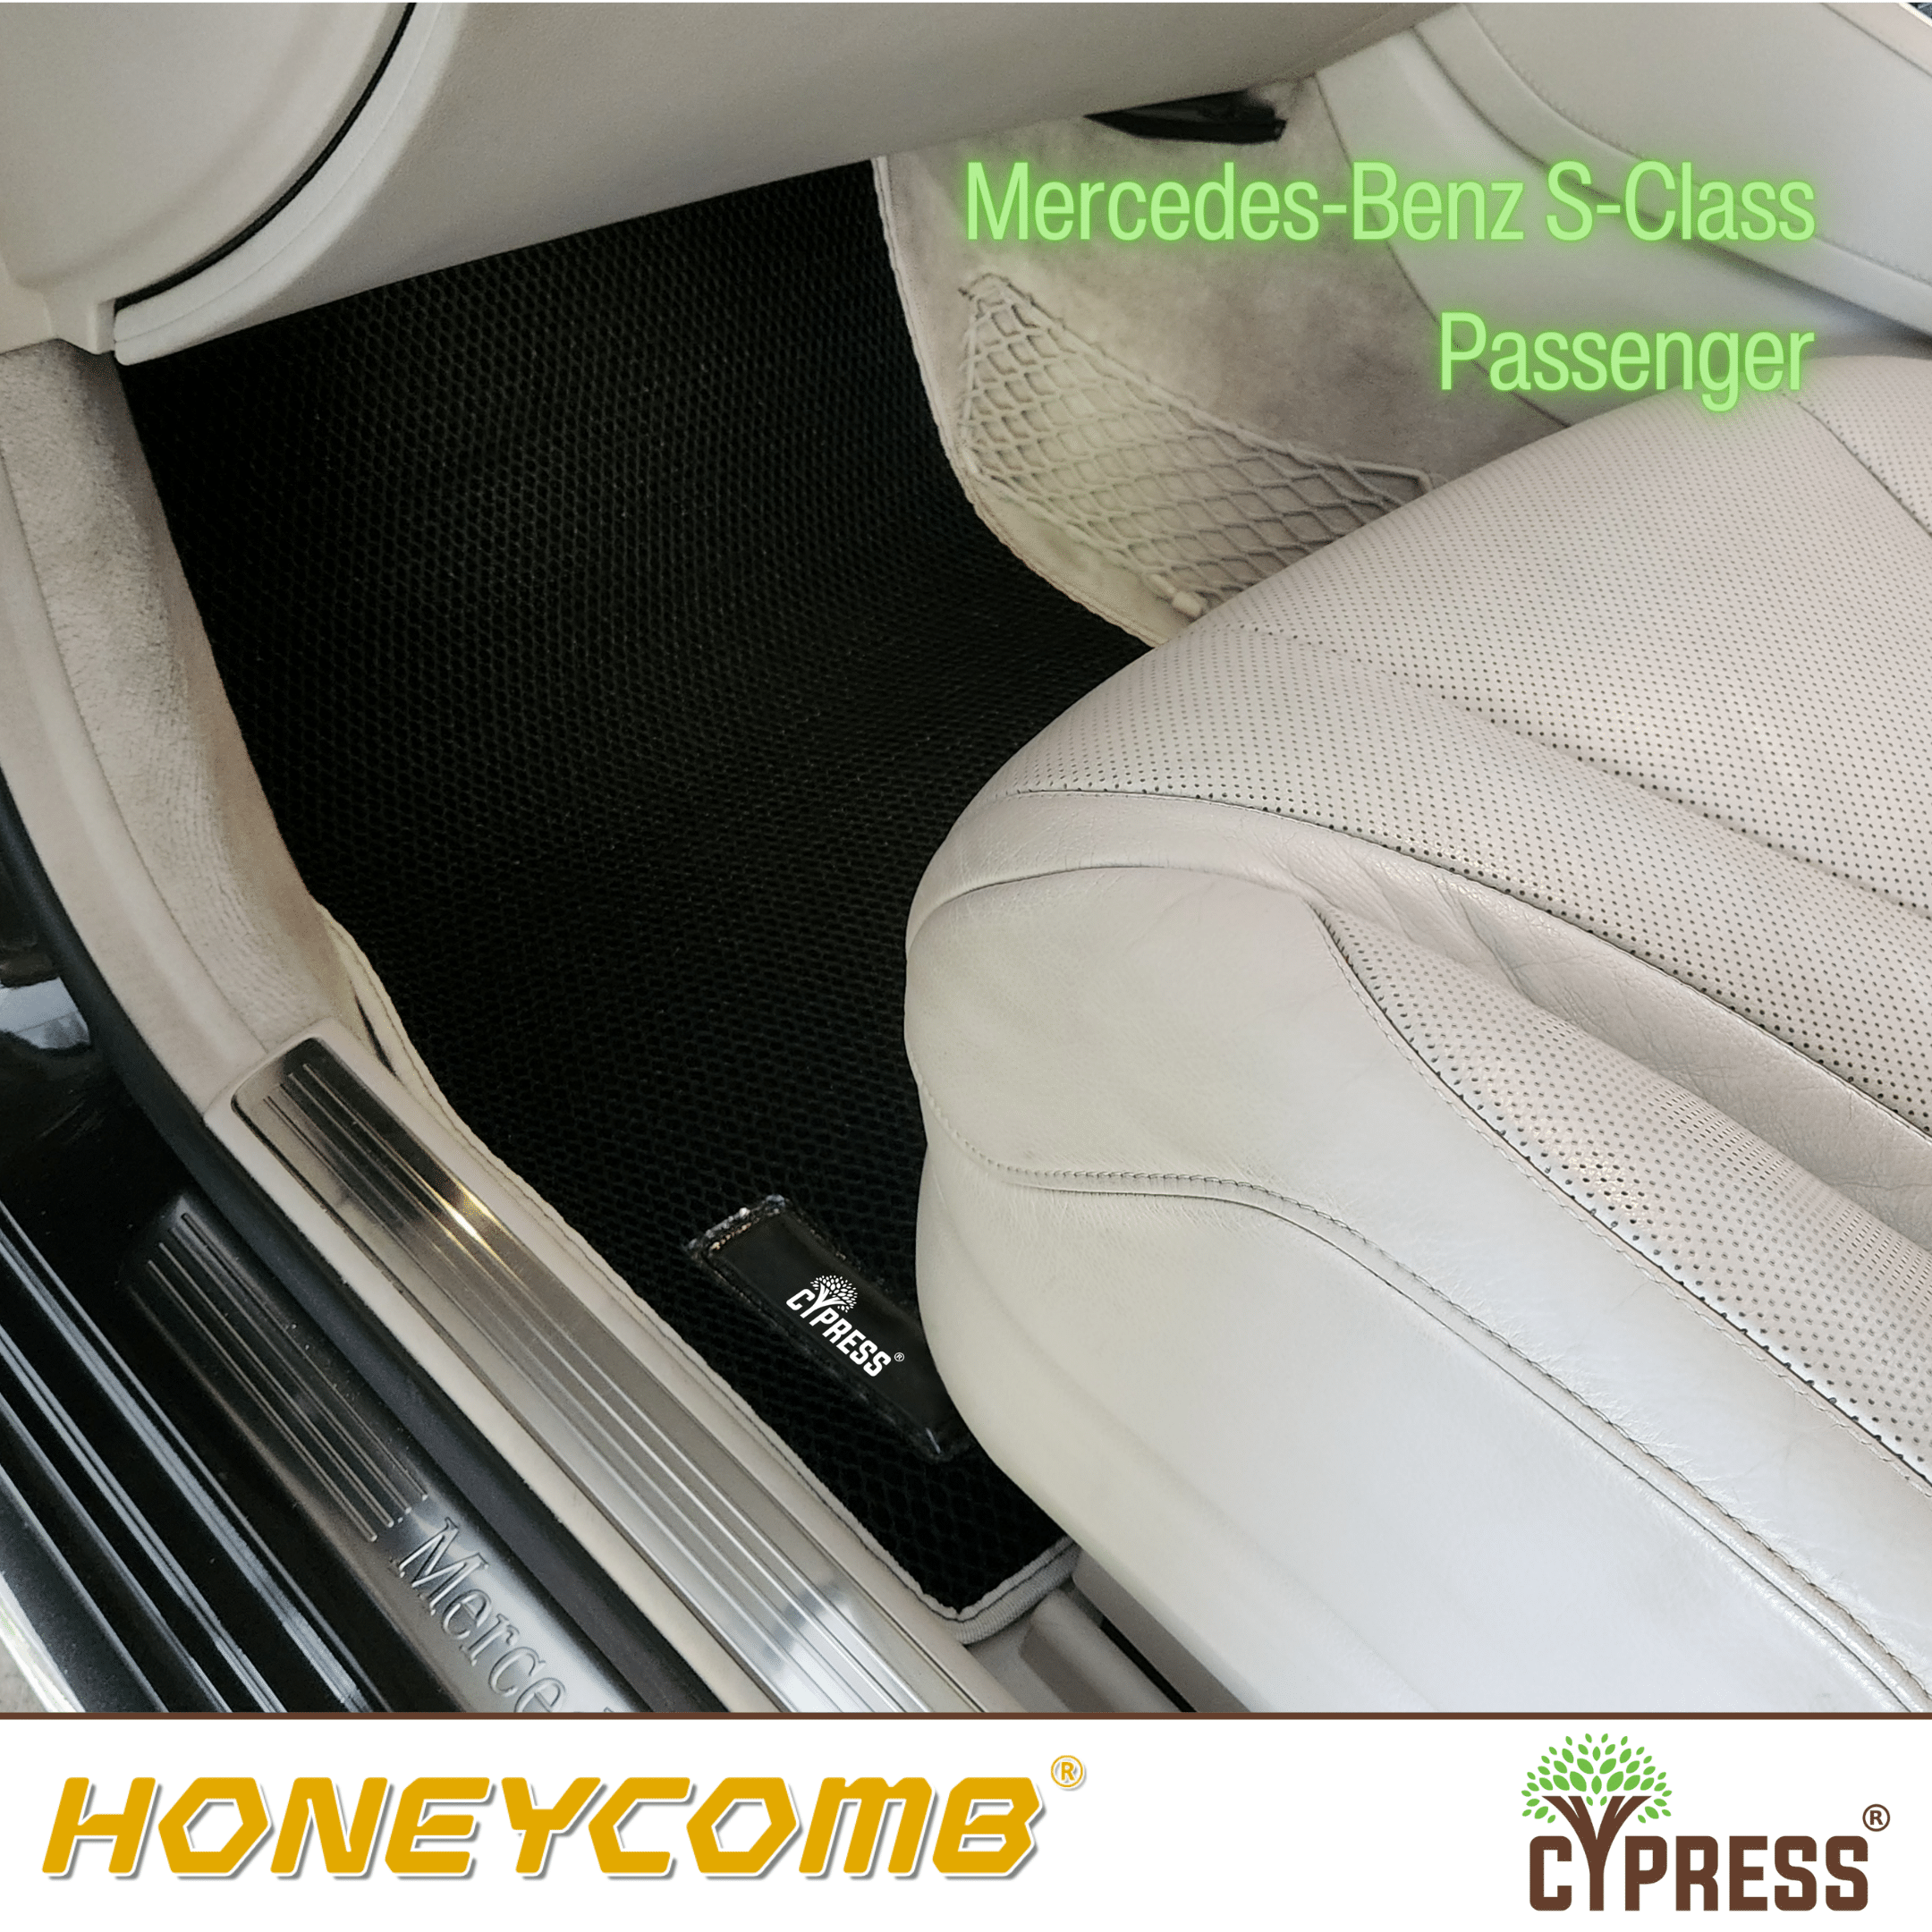 Mercedes S-Class Honeycomb Black with Grey Trim Instagram (Passenger)